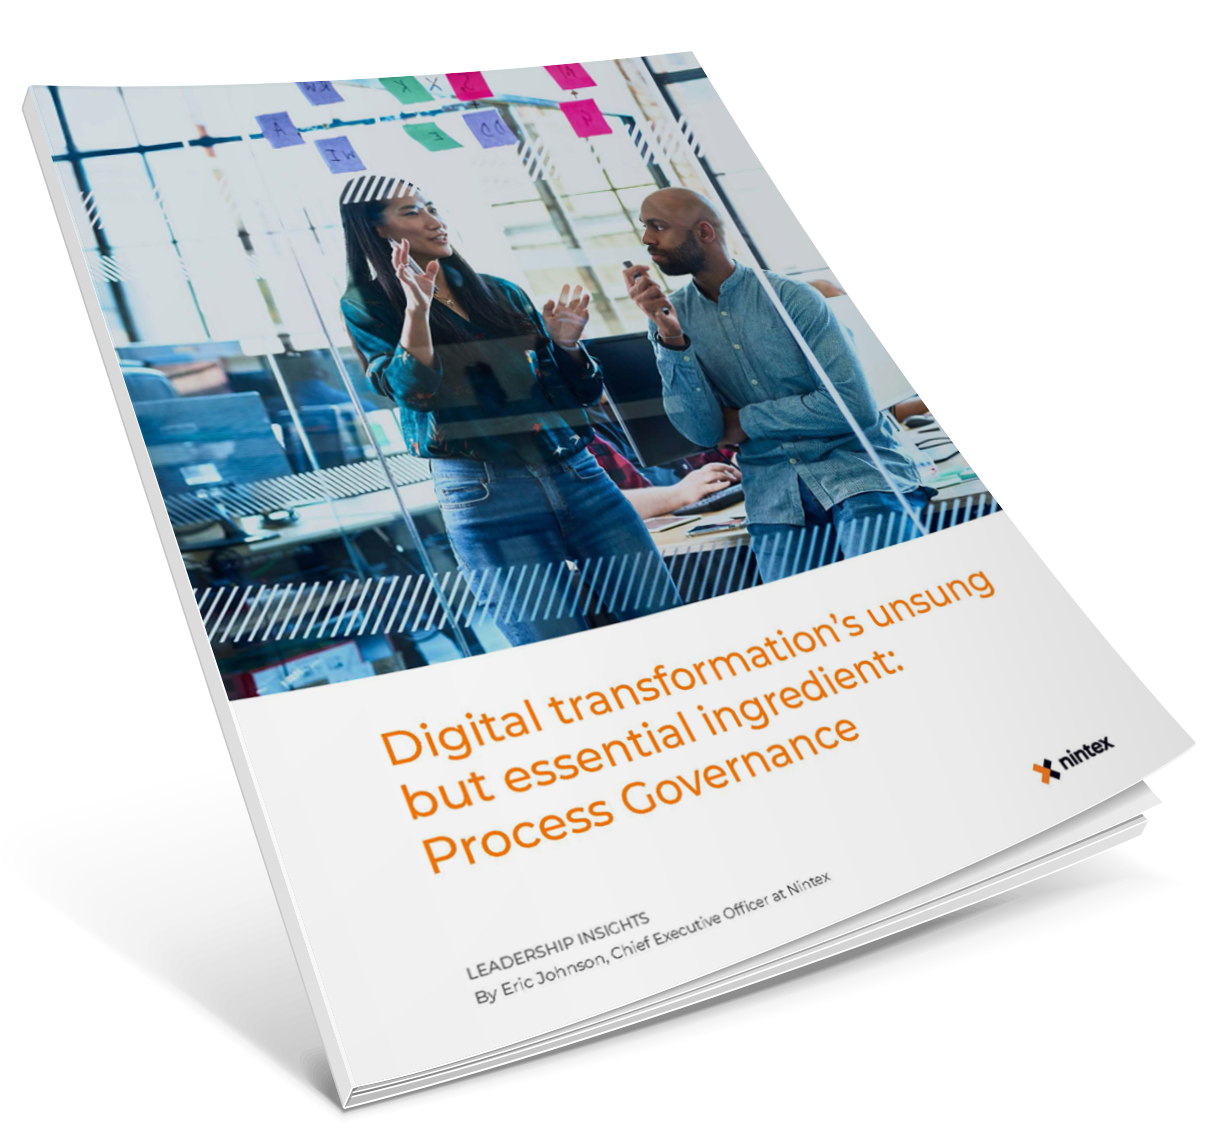 Digital transformation's unsung but essential ingredient: process governance